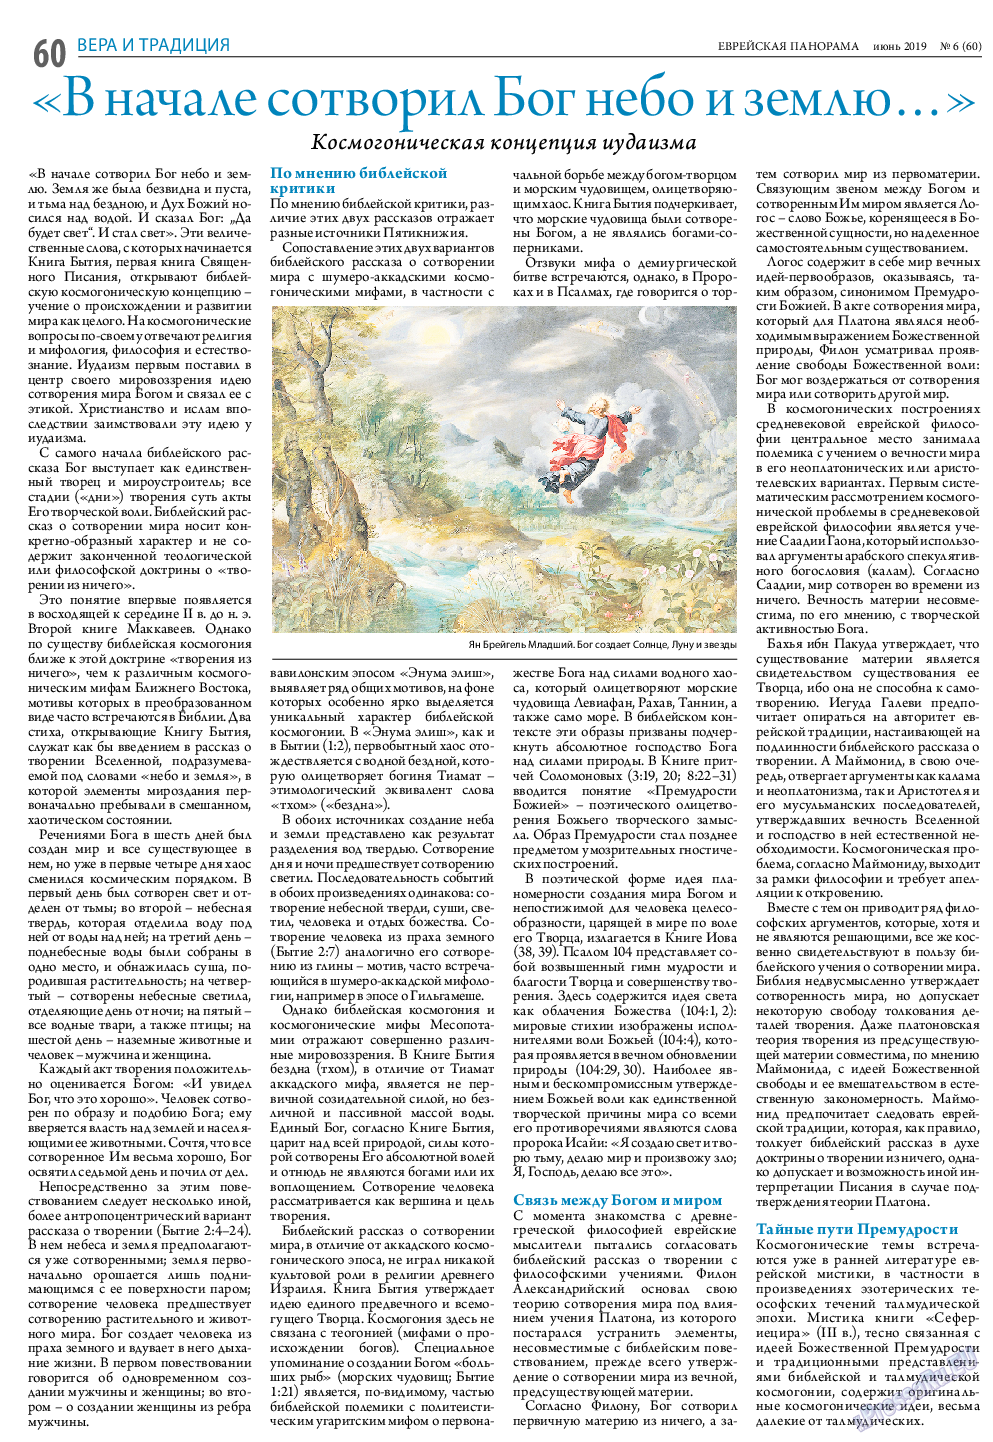 Еврейская панорама, газета. 2019 №6 стр.60